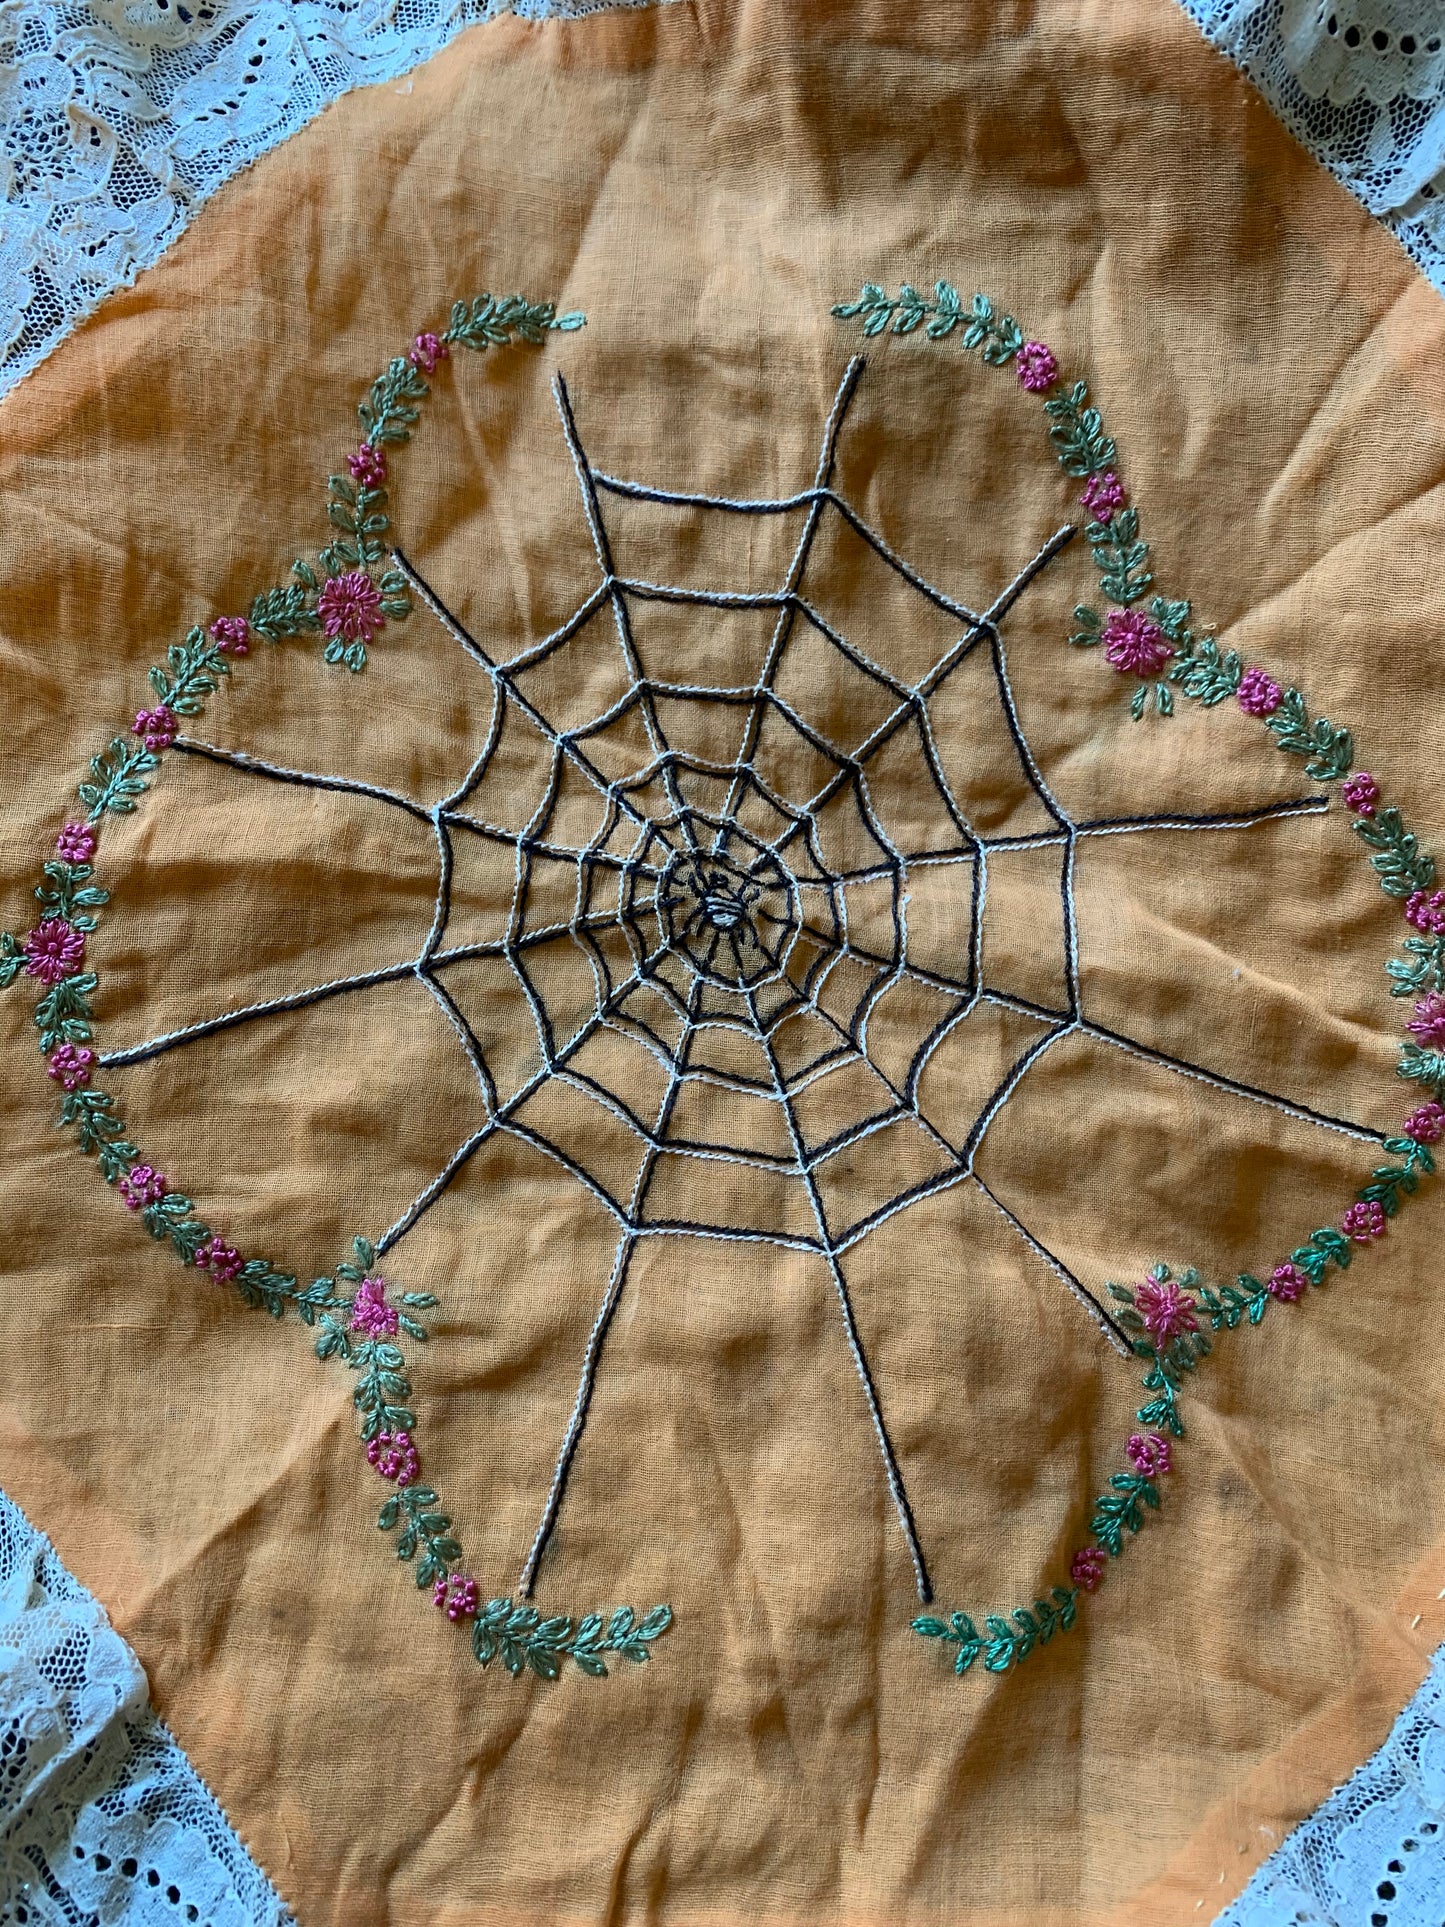 Vintage spider web pillowcase old flapper boudoir cushion cover